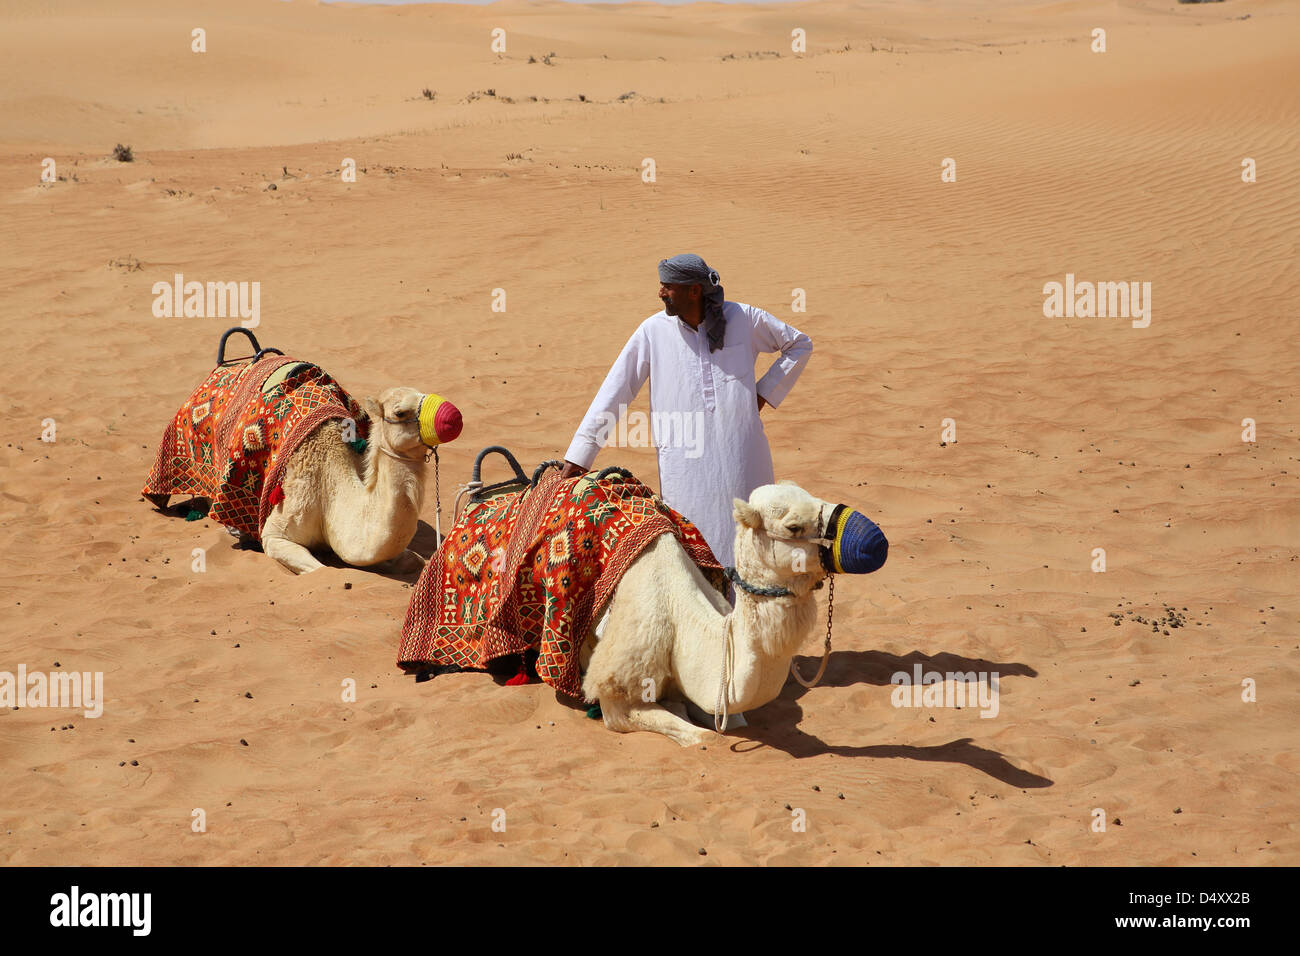 Man with camels in desert, Dubai, United Arab Emirates Stock Photo